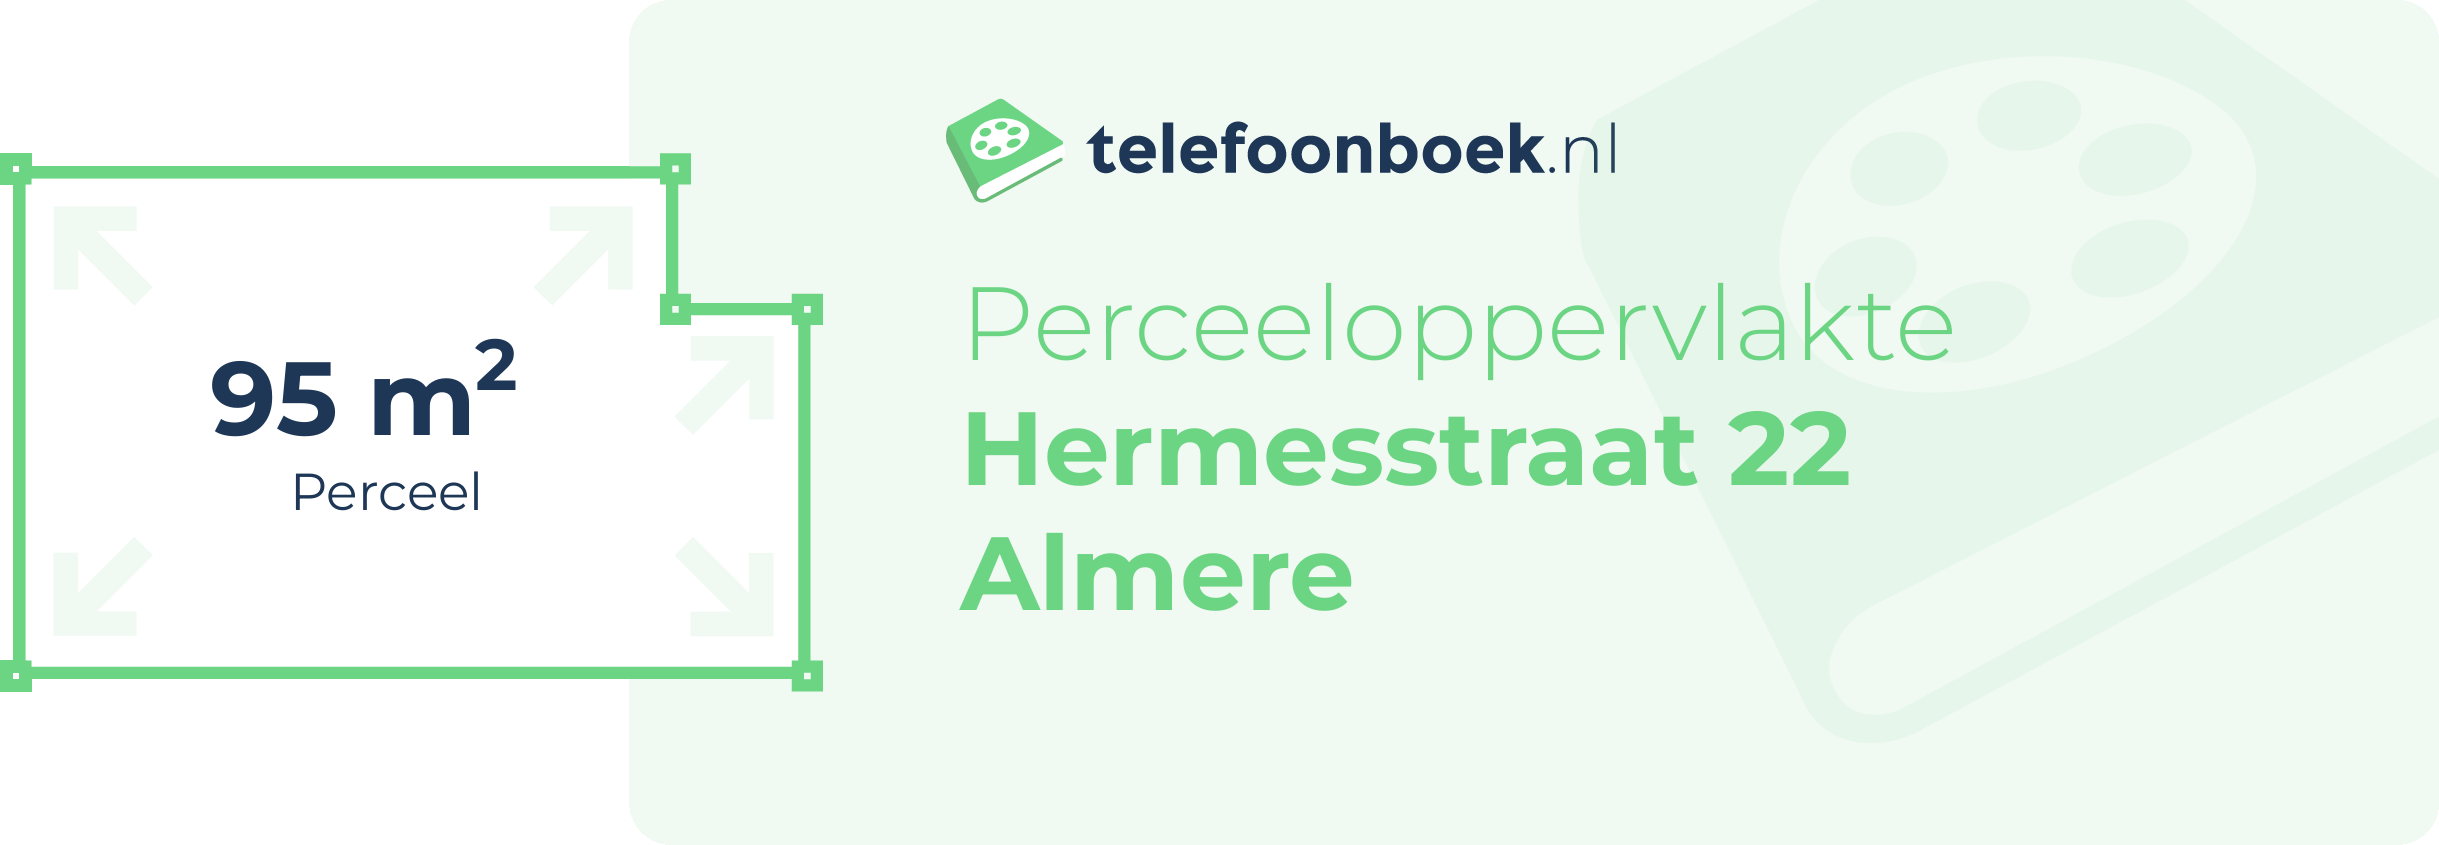 Perceeloppervlakte Hermesstraat 22 Almere